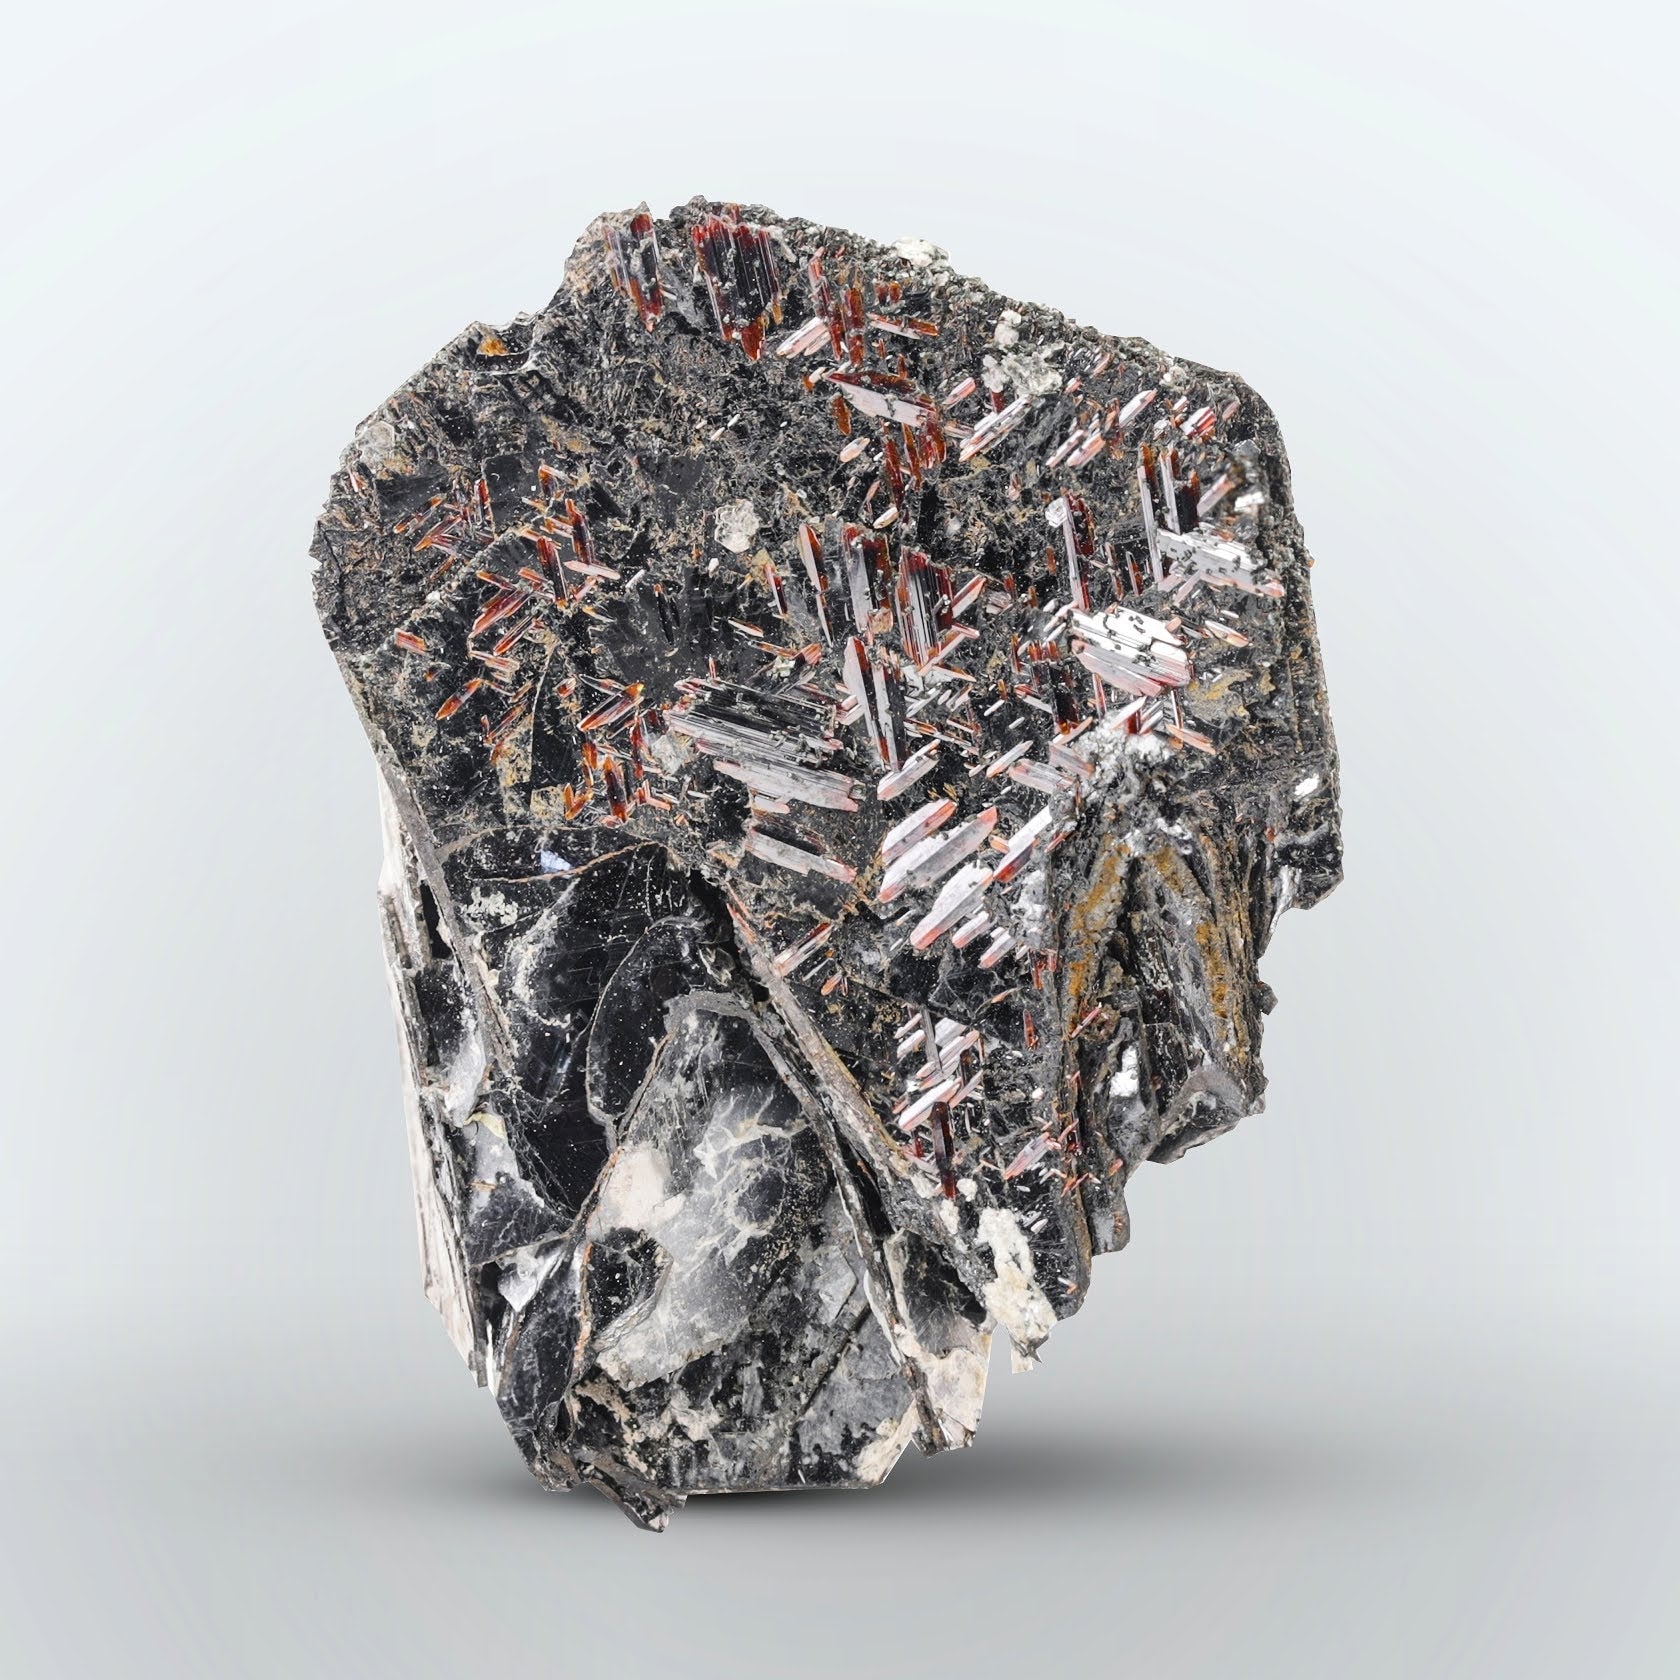 Sagenite Rutile Crystals on Hematite